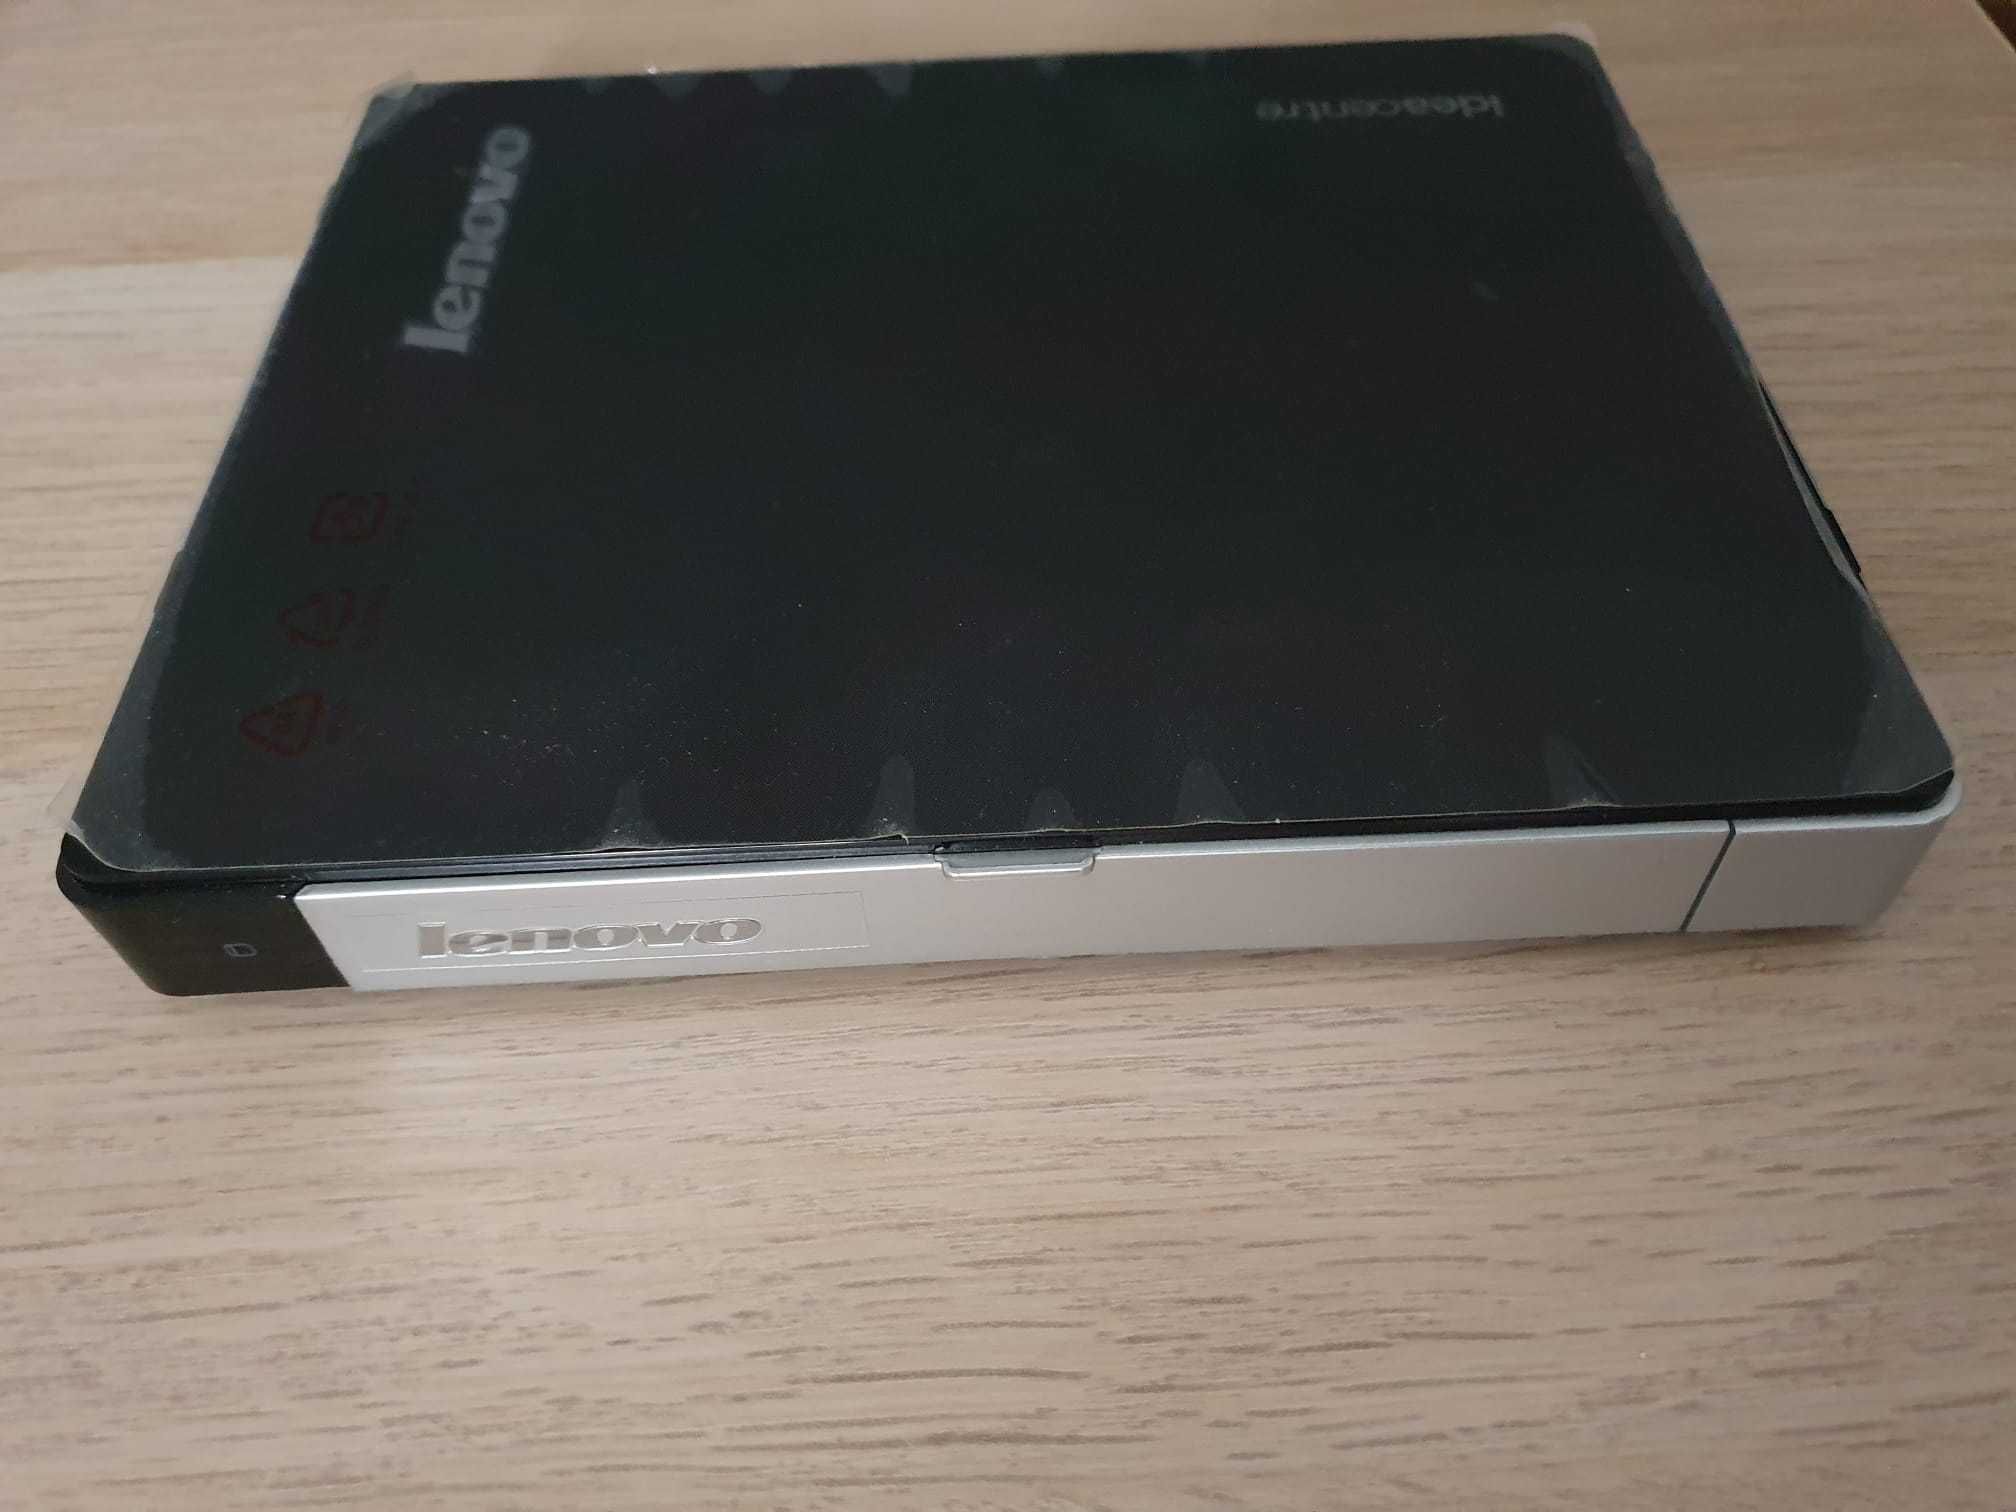 Mini PC Lenovo IdeaCentre Q180 Atom D2700 2.13GHz 2GB 320GB